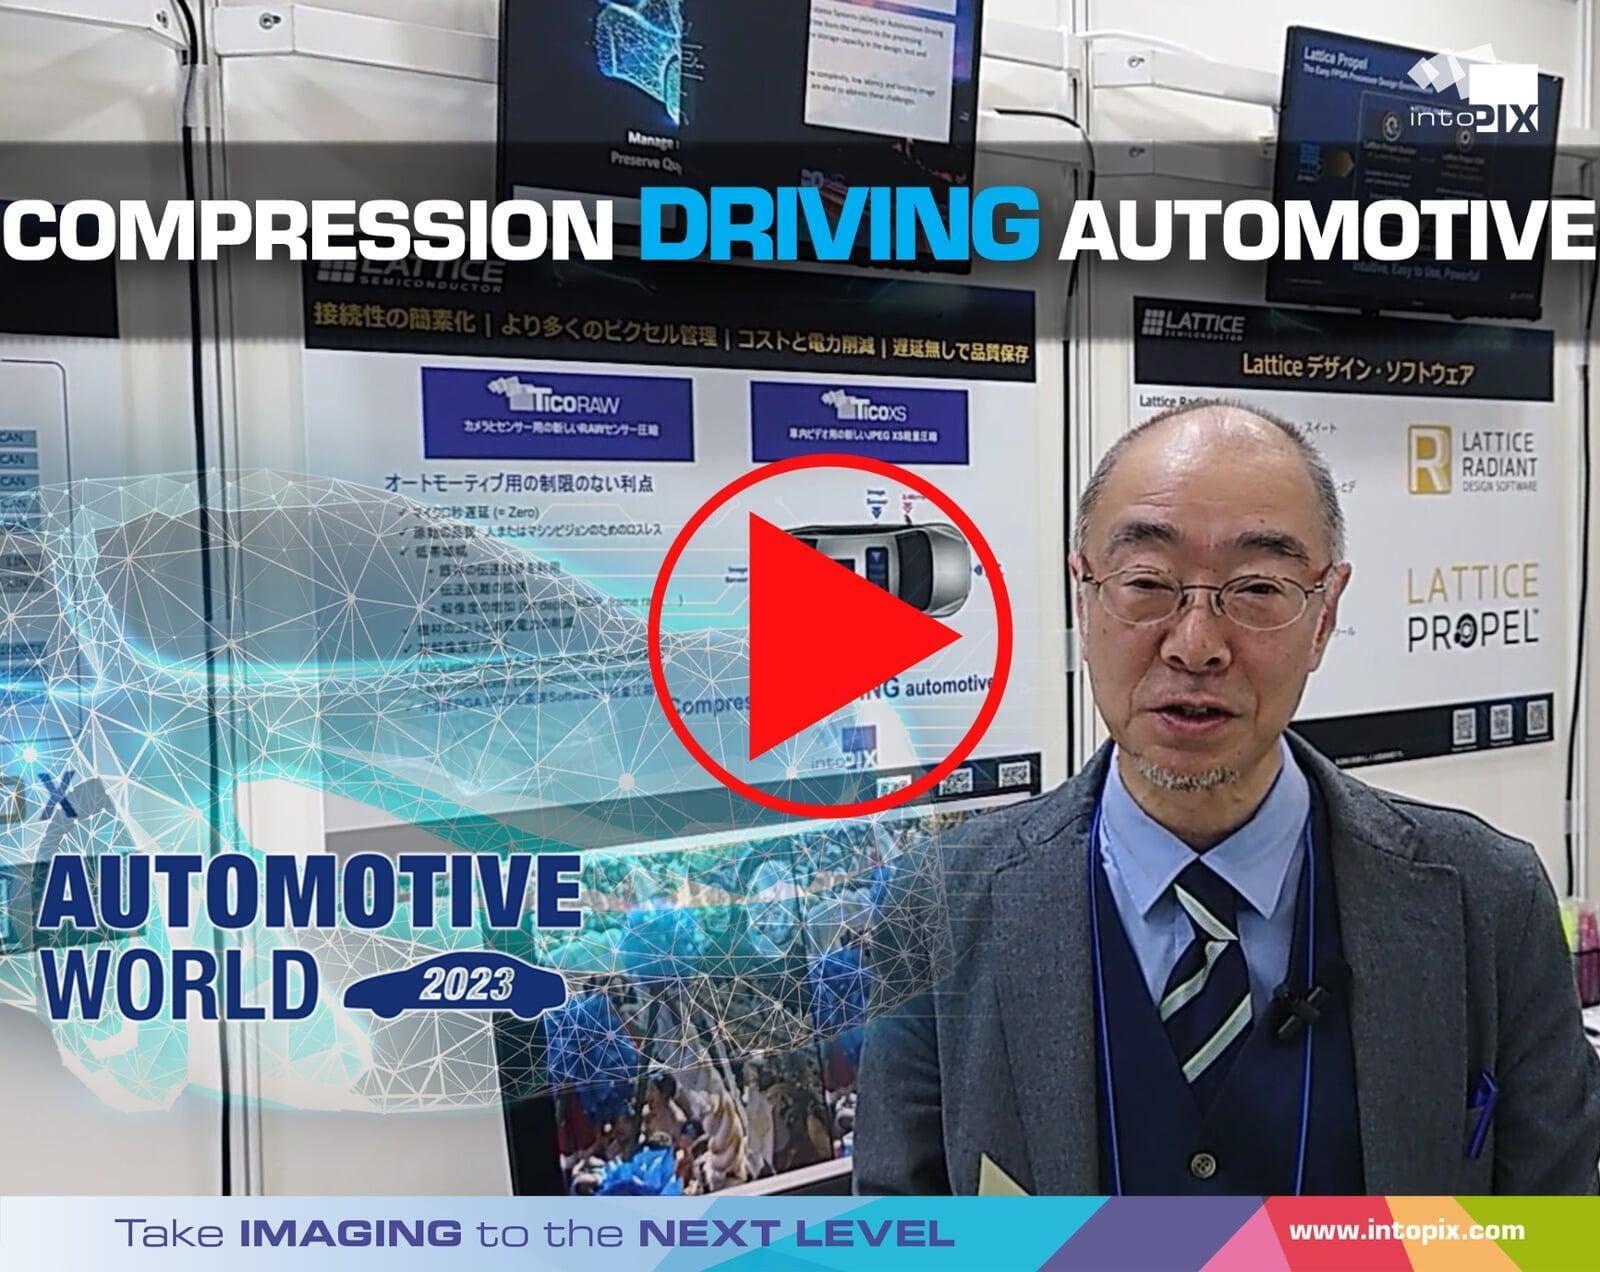 Automotive World 2023의 일본어 비디오 데모: Compression DRIVING automotive